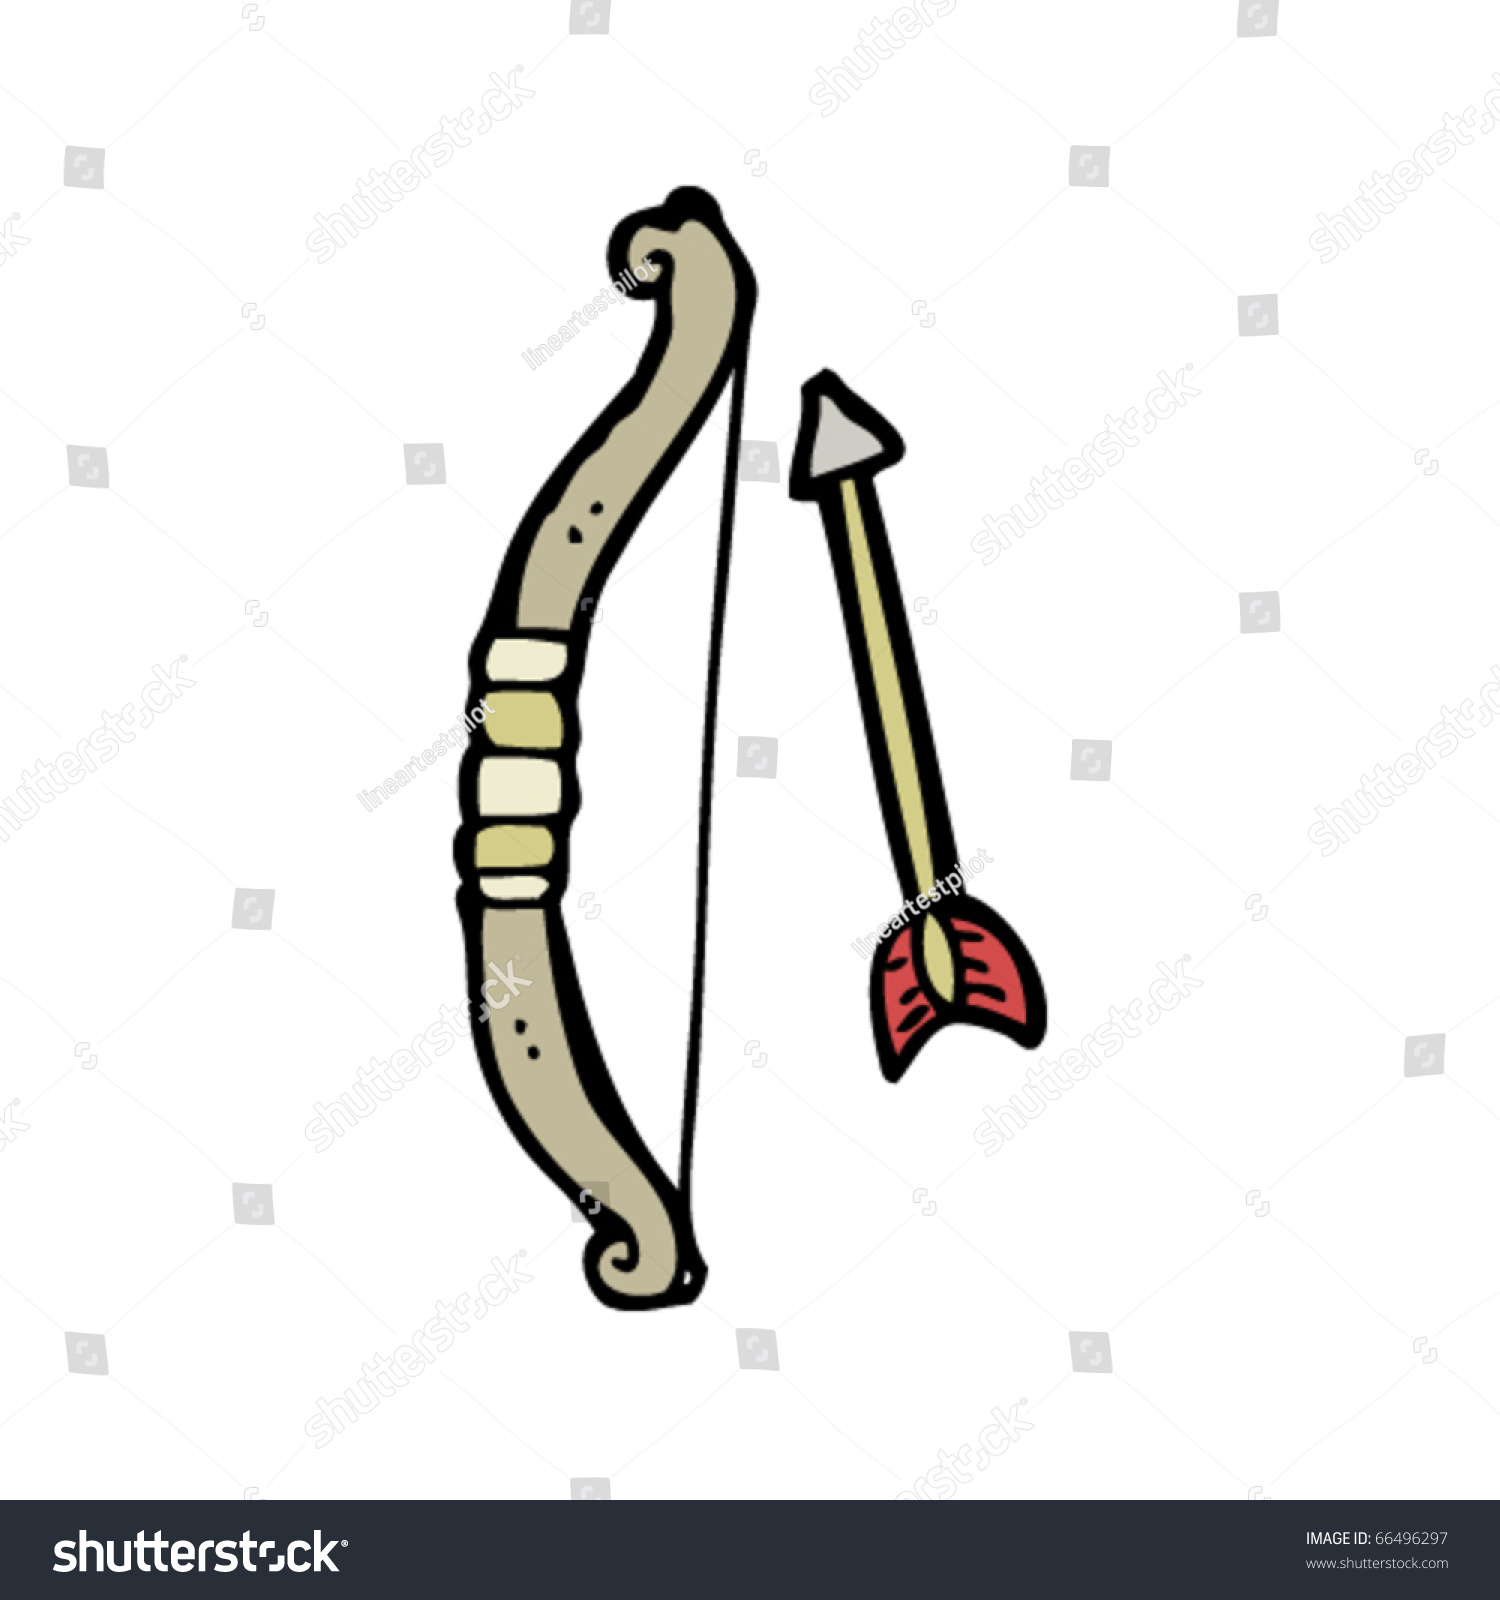 Bow And Arrow Cartoon Stock Vector 66496297 : Shutterstock